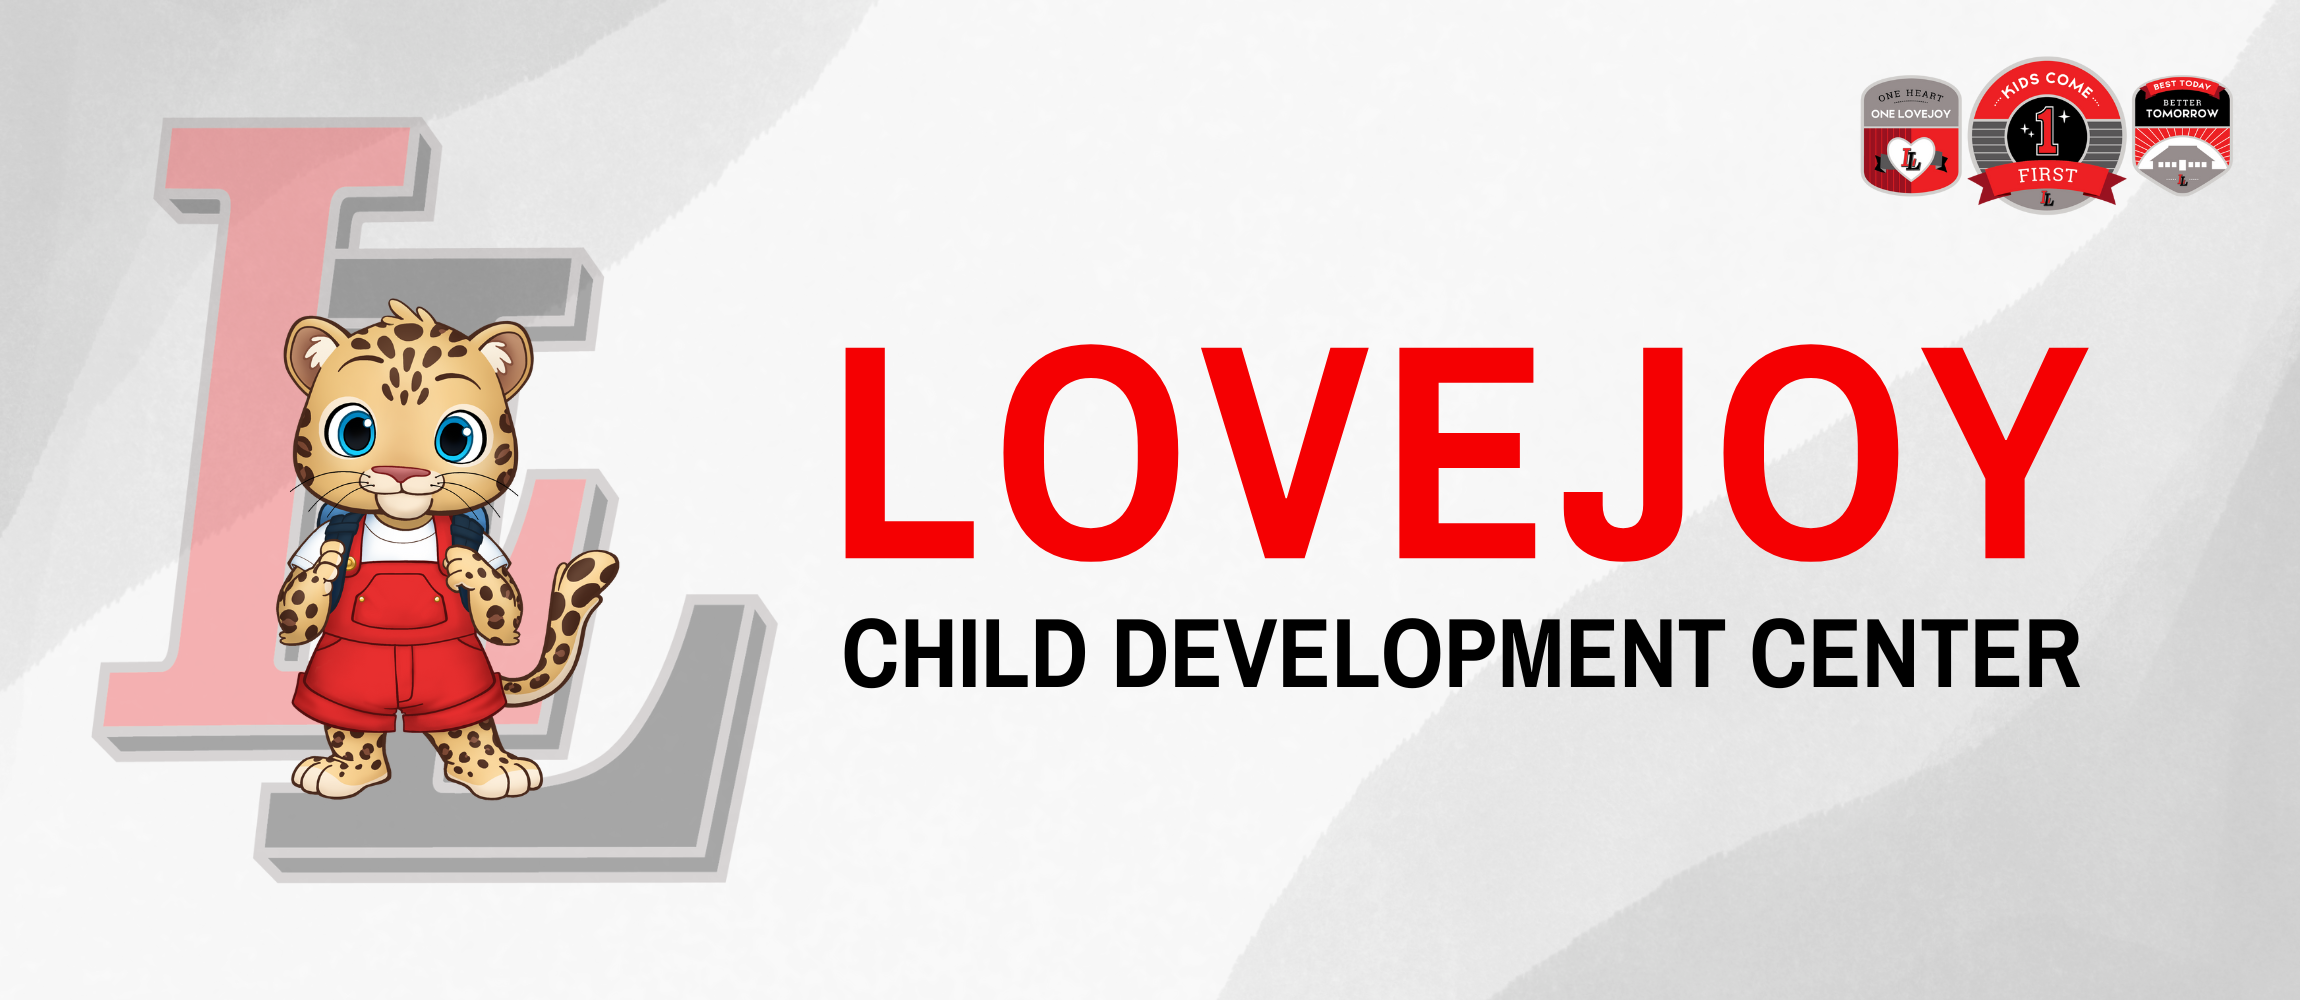 Lovejoy Child Development Center